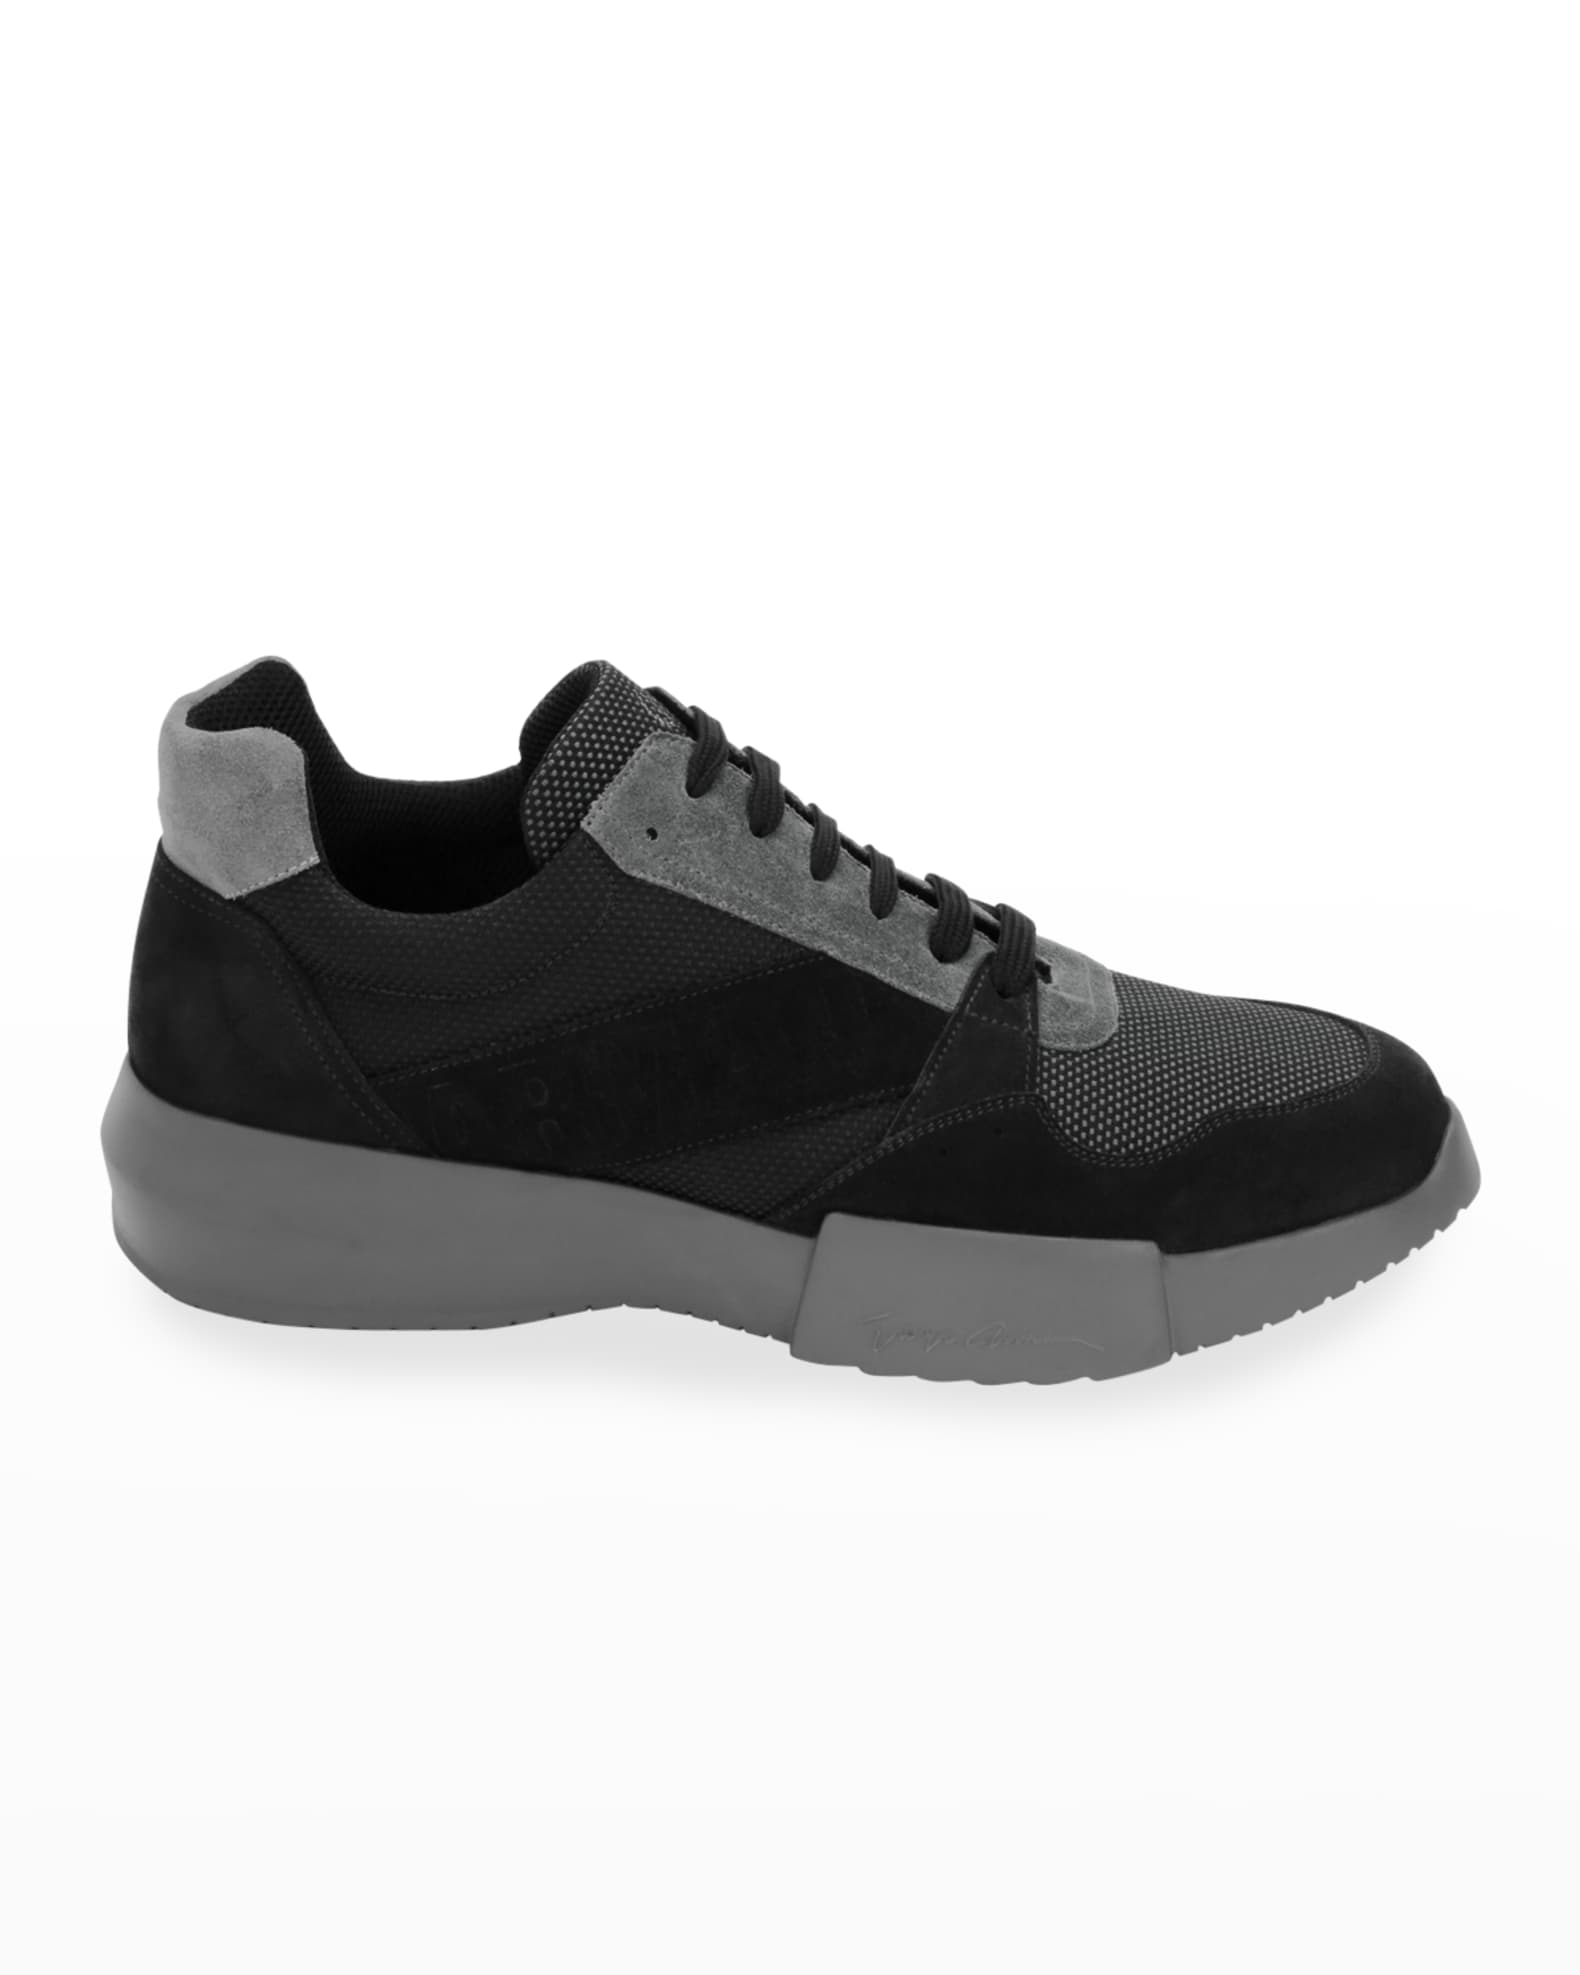 Giorgio Armani Men's Leather & Mesh Training Sneakers | Neiman Marcus